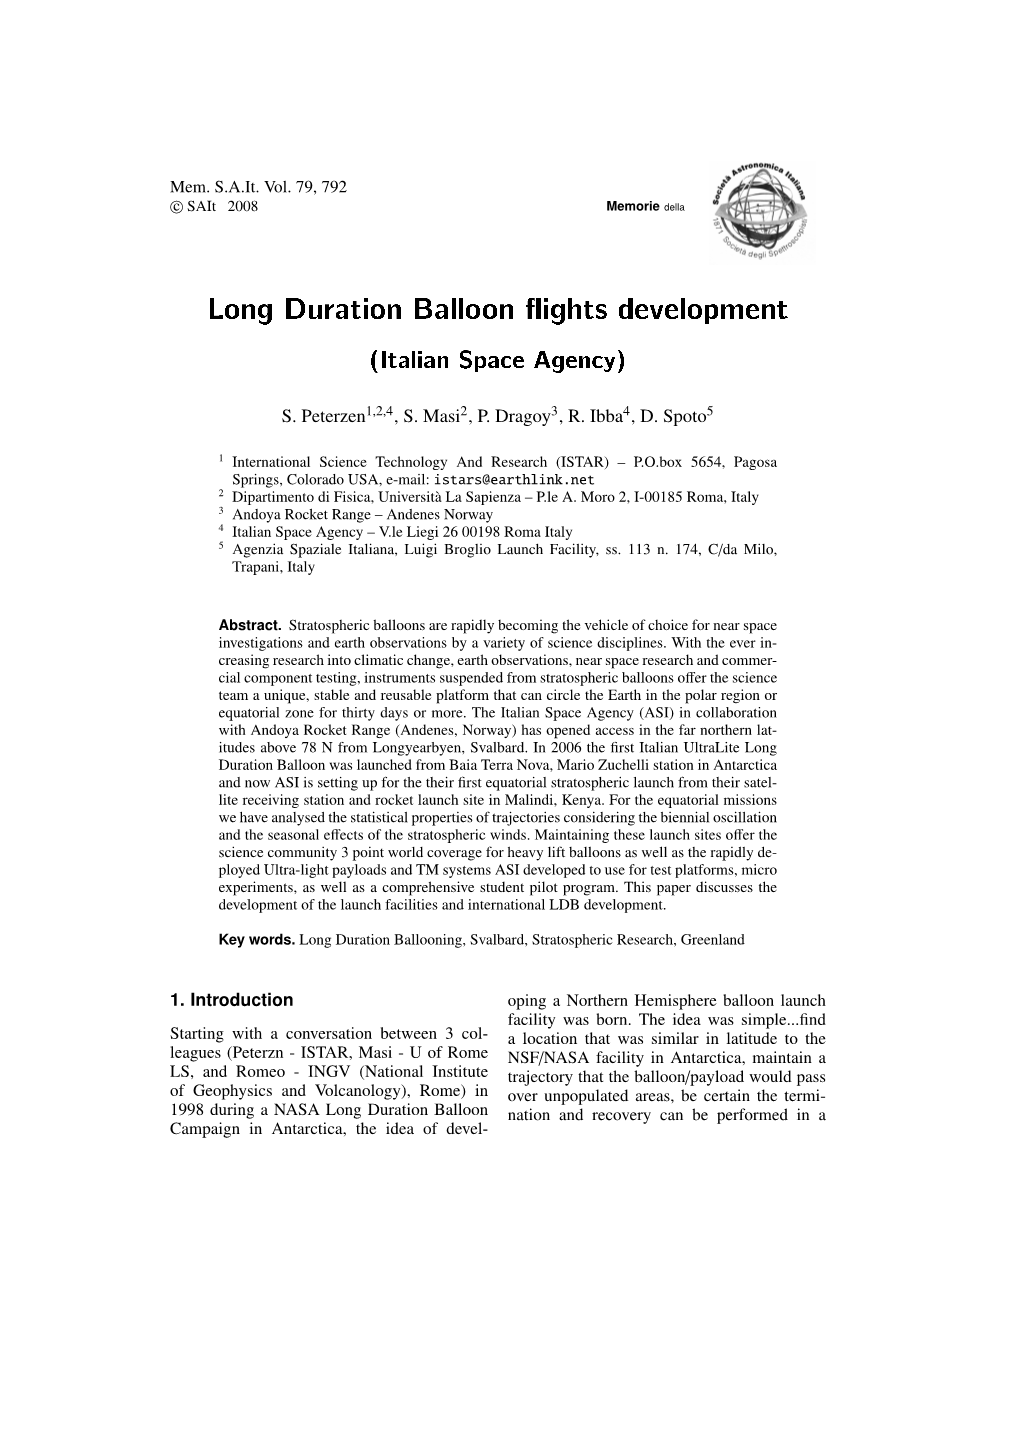 Long Duration Balloon Ights Development